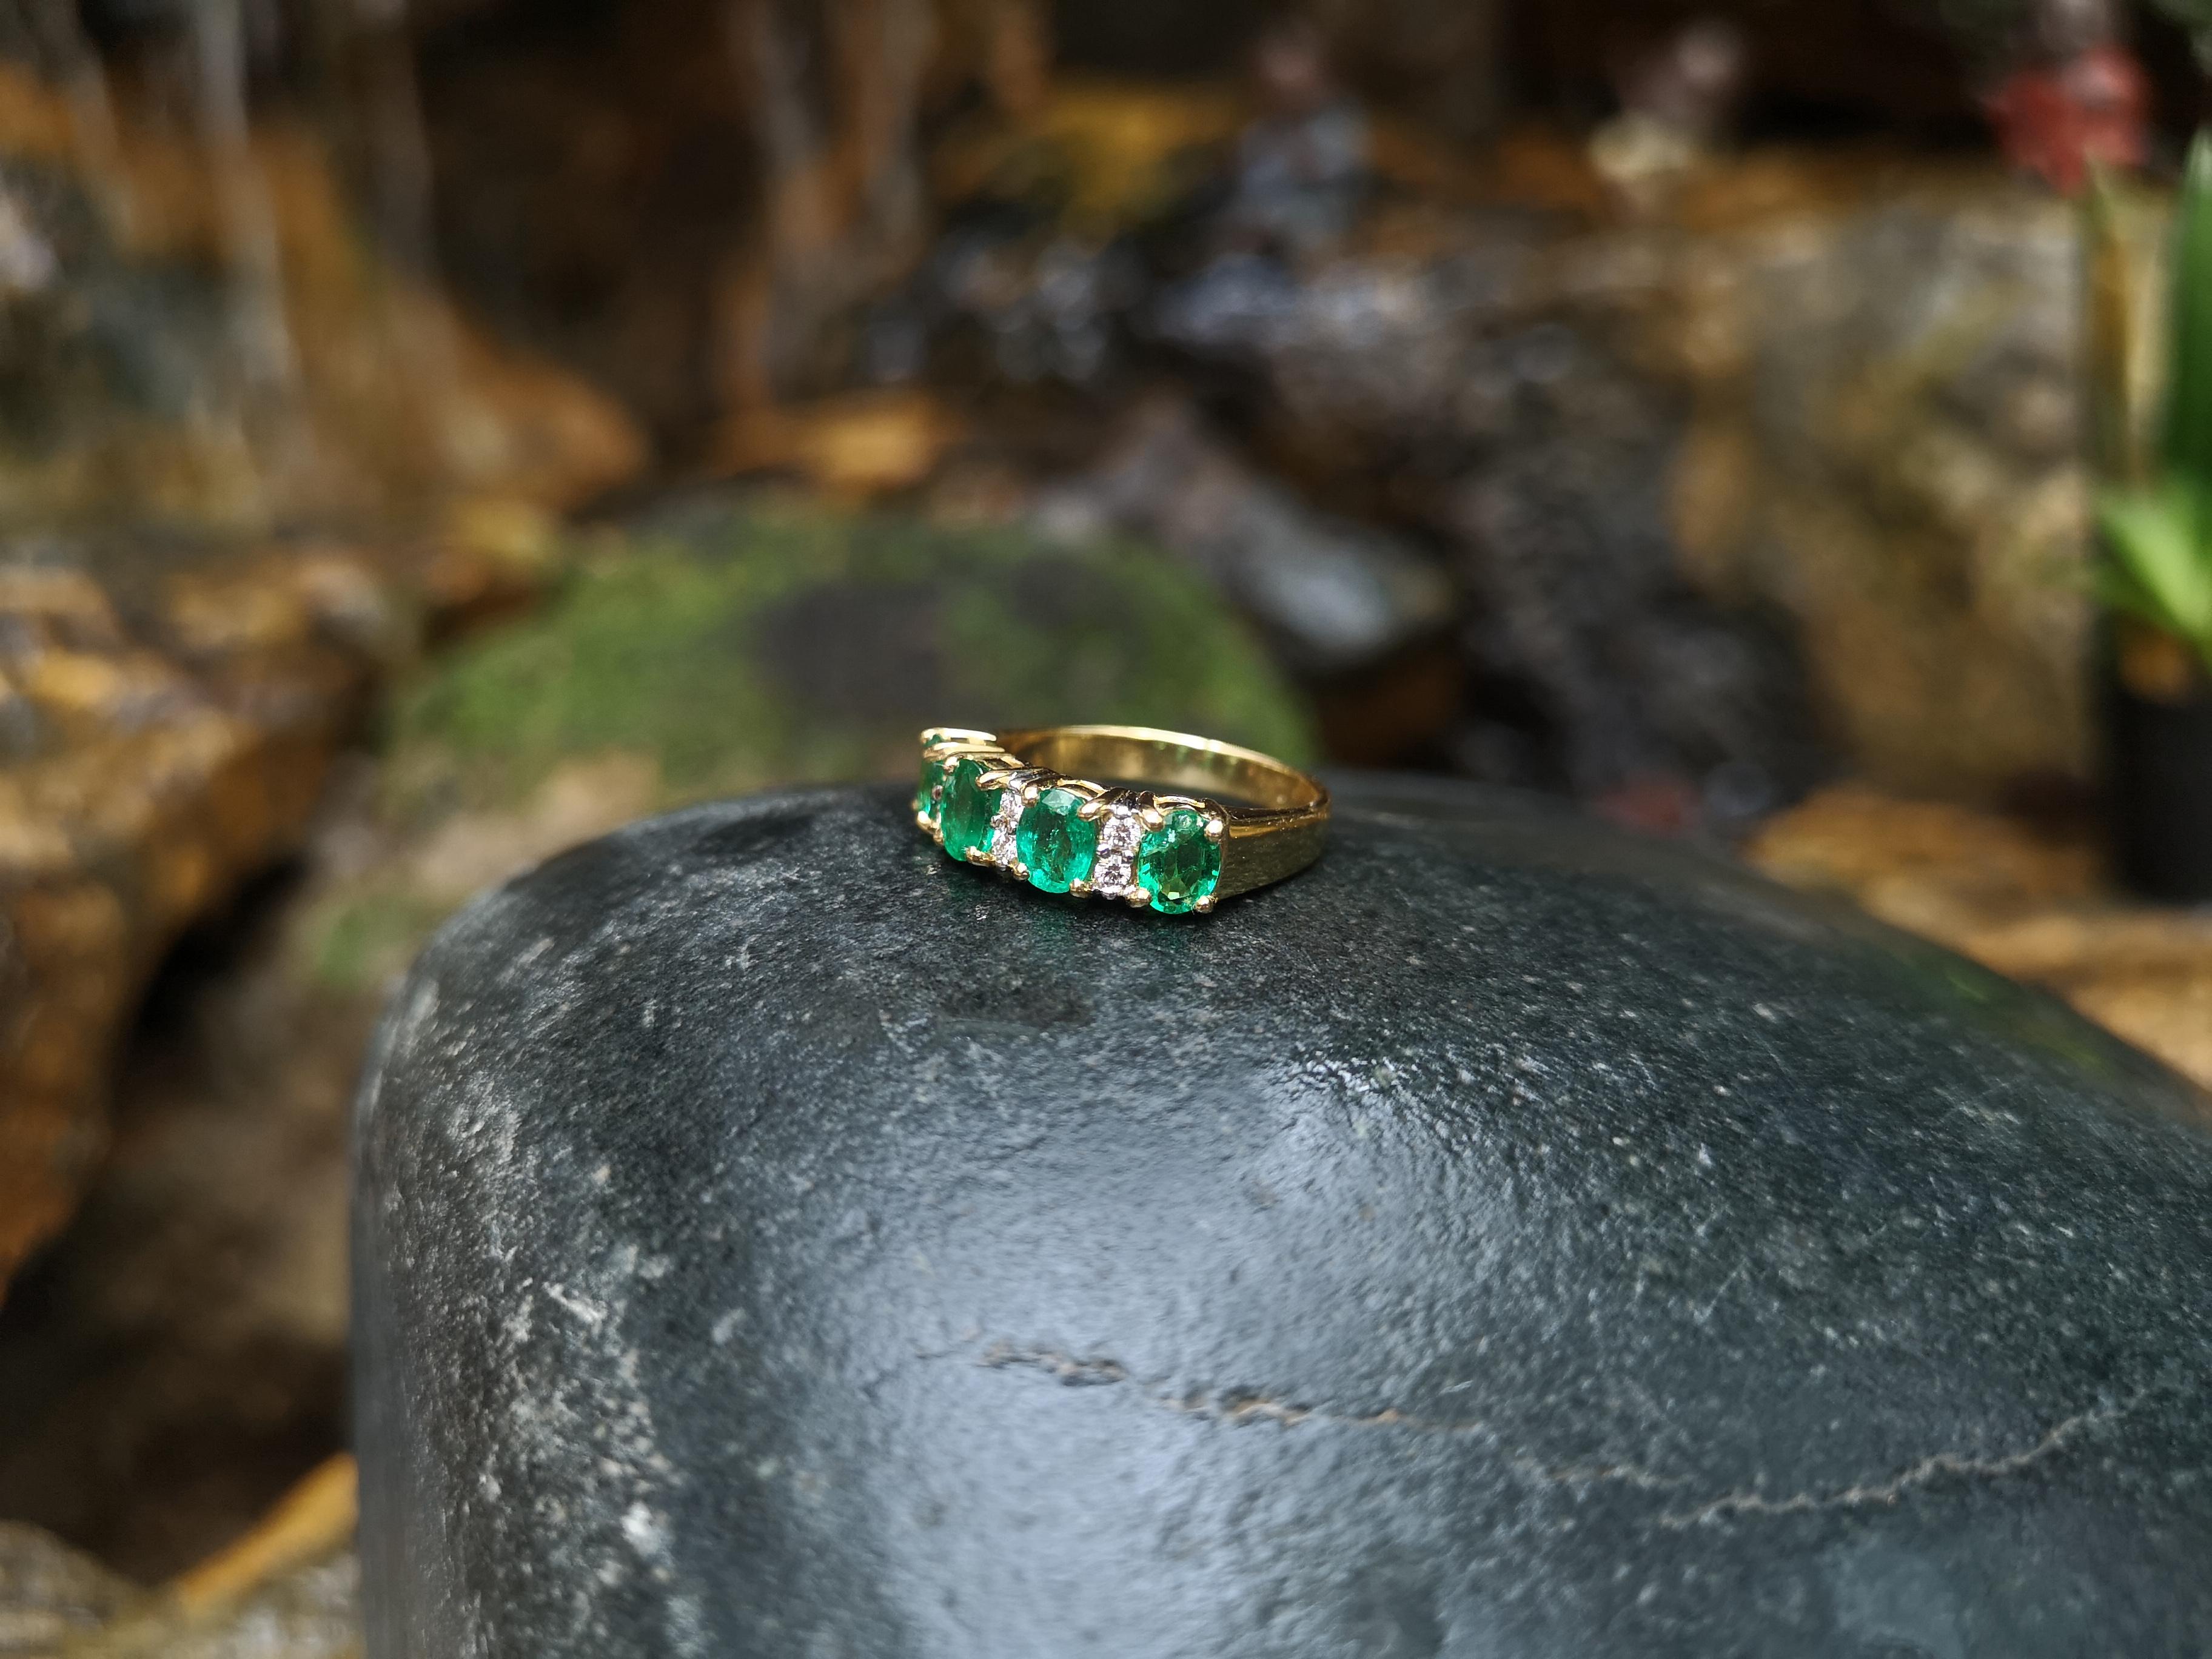 Oval Cut Emerald with Diamond Ring Set in 18 Karat Gold Settings